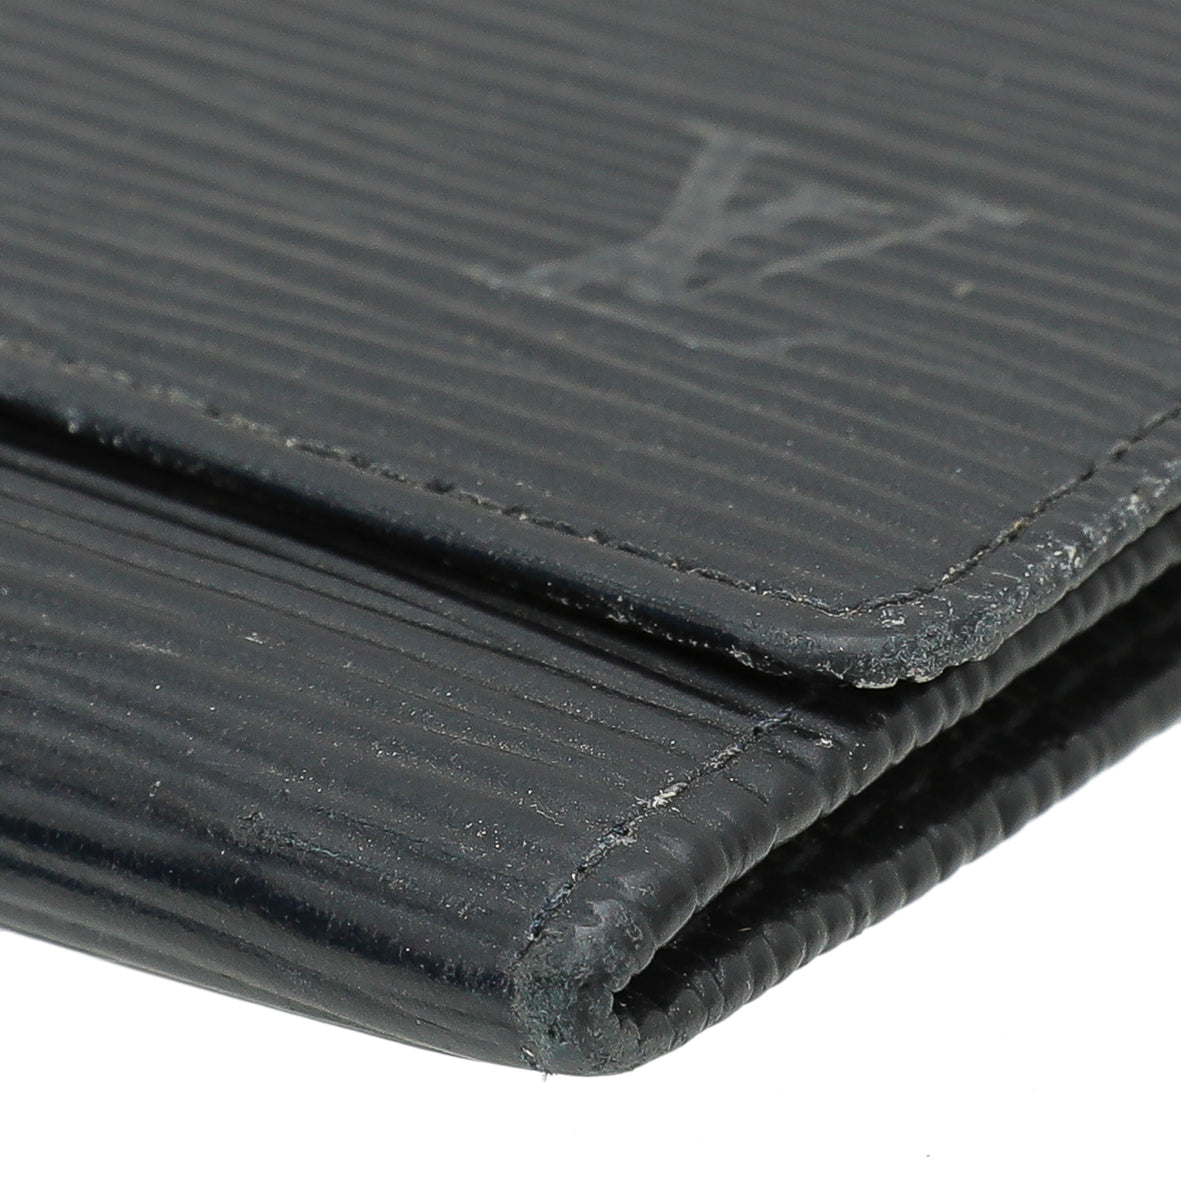 Louis Vuitton Black Long Wallet